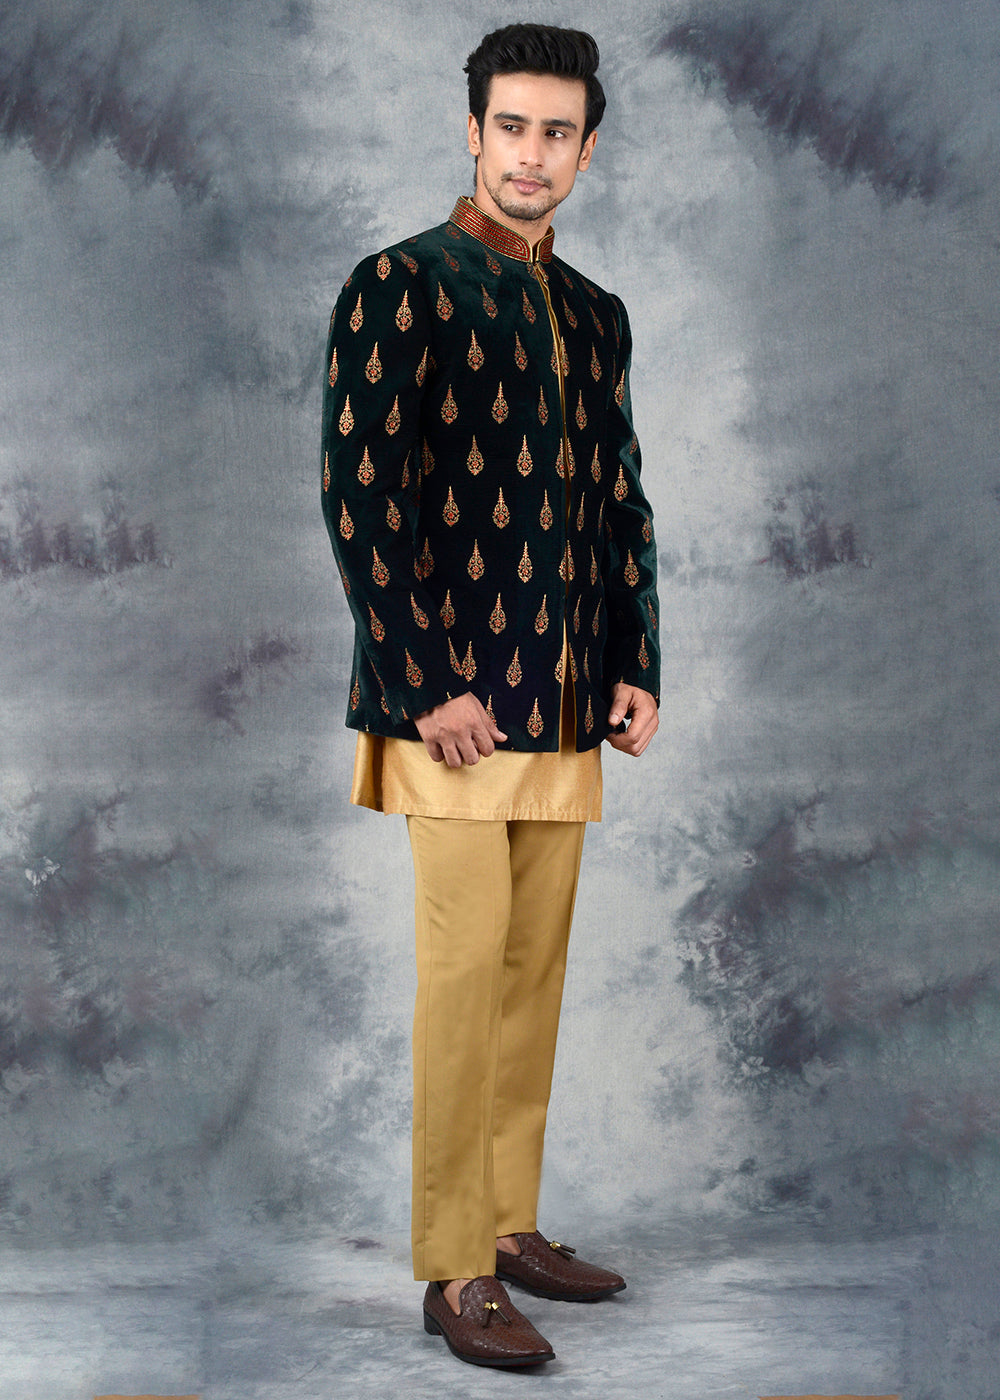 jodhpuri suit menswear suits | Golden Thread Sherwani on Rent in Jaipur in  Jaipur, India